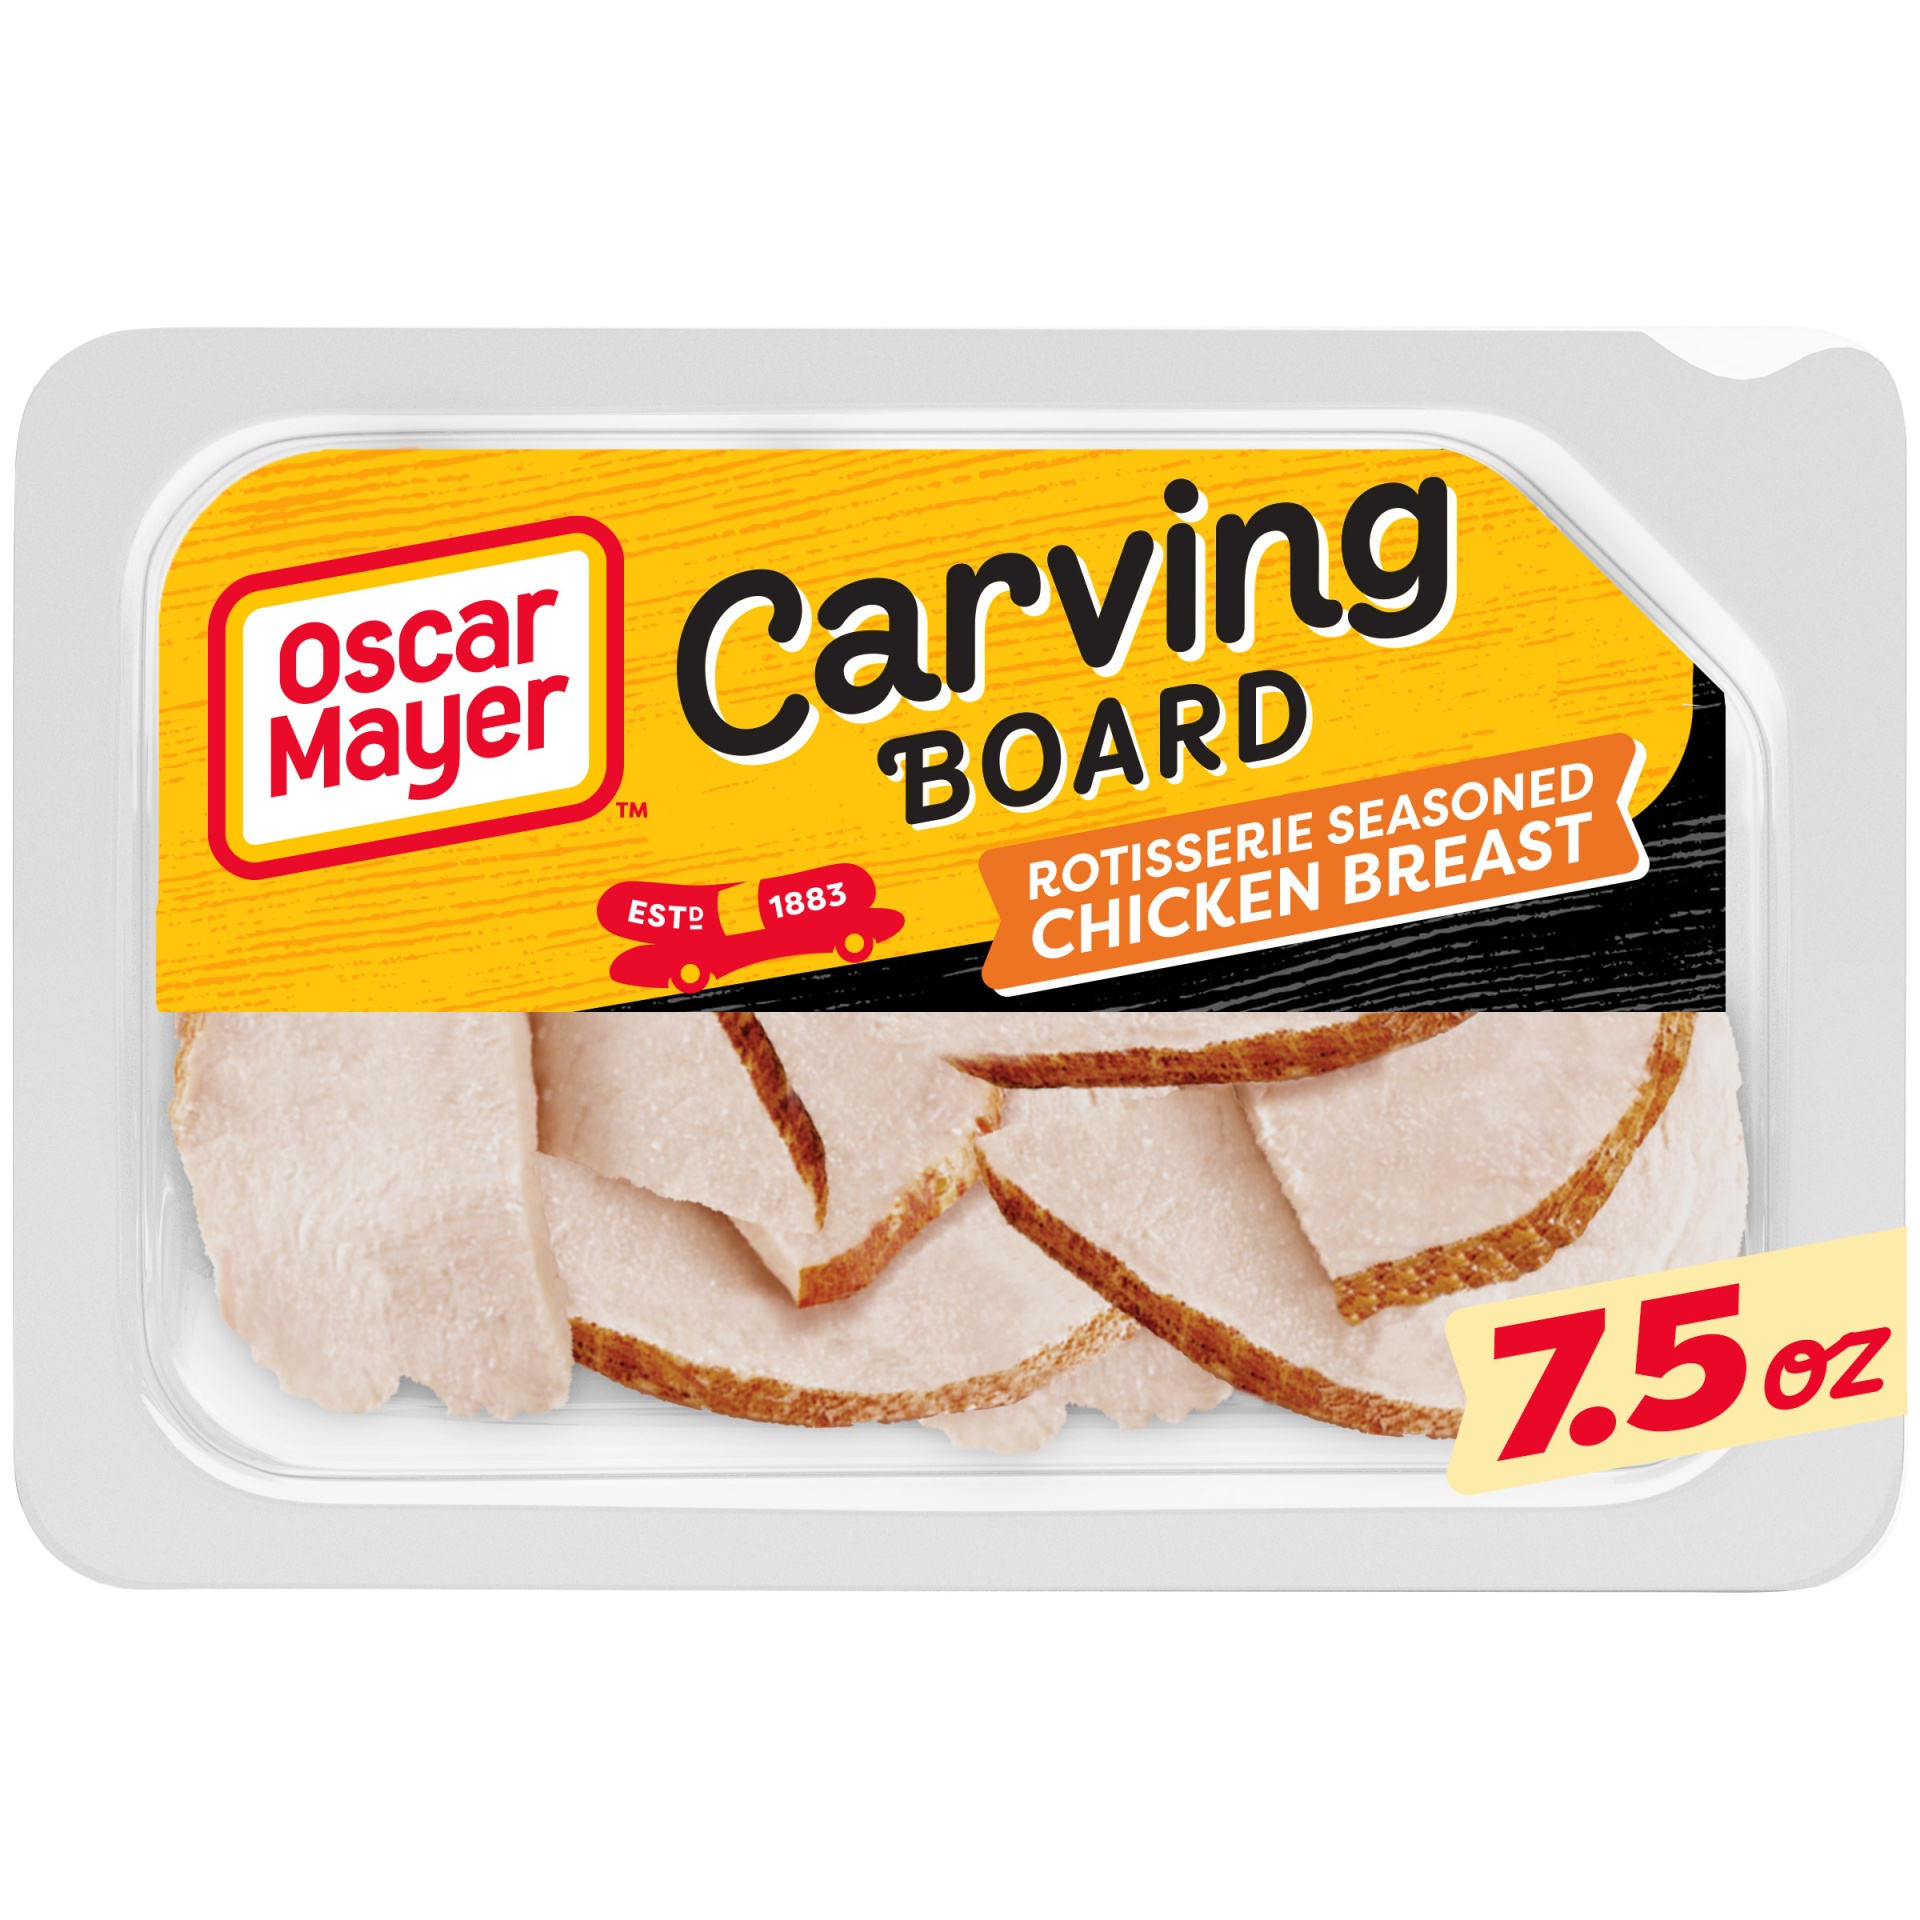 slide 1 of 2, Oscar Mayer Carving Board Rotisserie Seasoned Chicken Breast Lunch Meat Tray, 7.5 oz